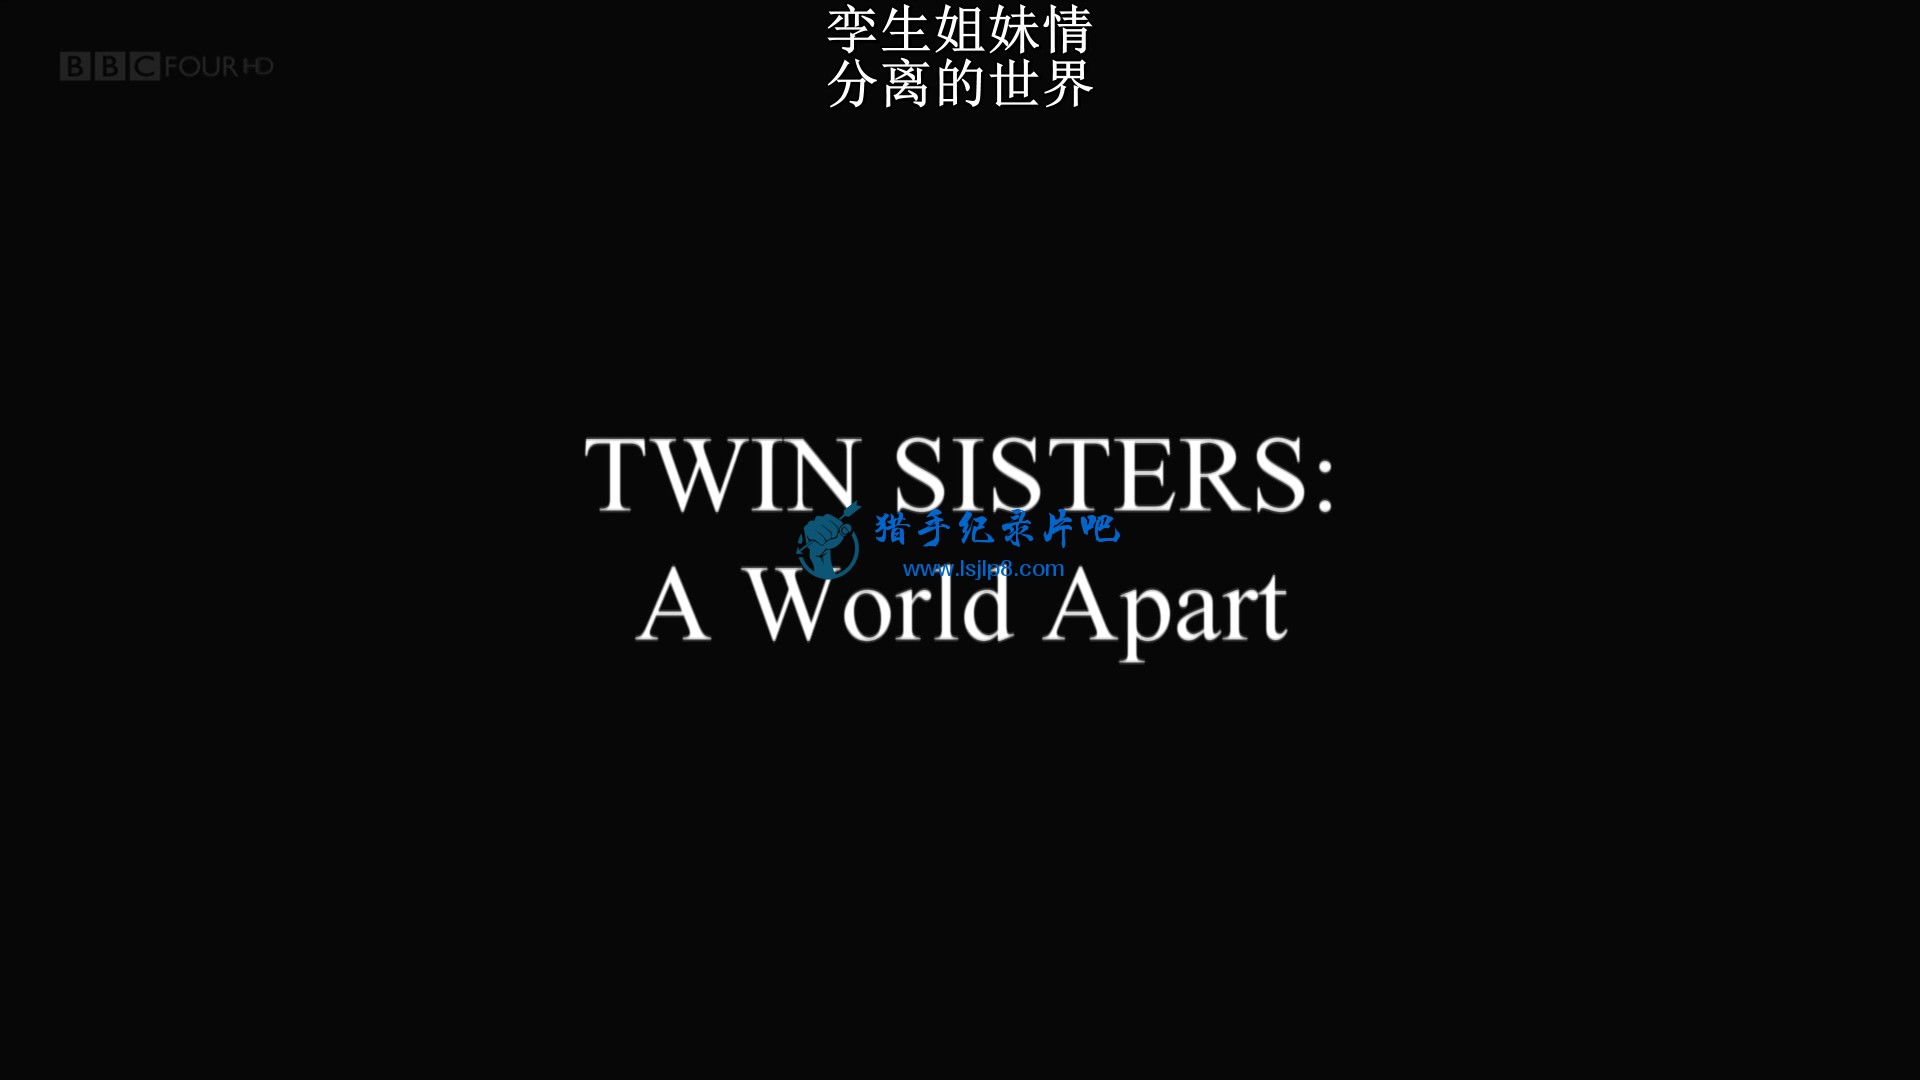 BBC.Twin.Sisters.A.World.Apart.1080i.HDTV.mkv_20200509_083248.596.jpg